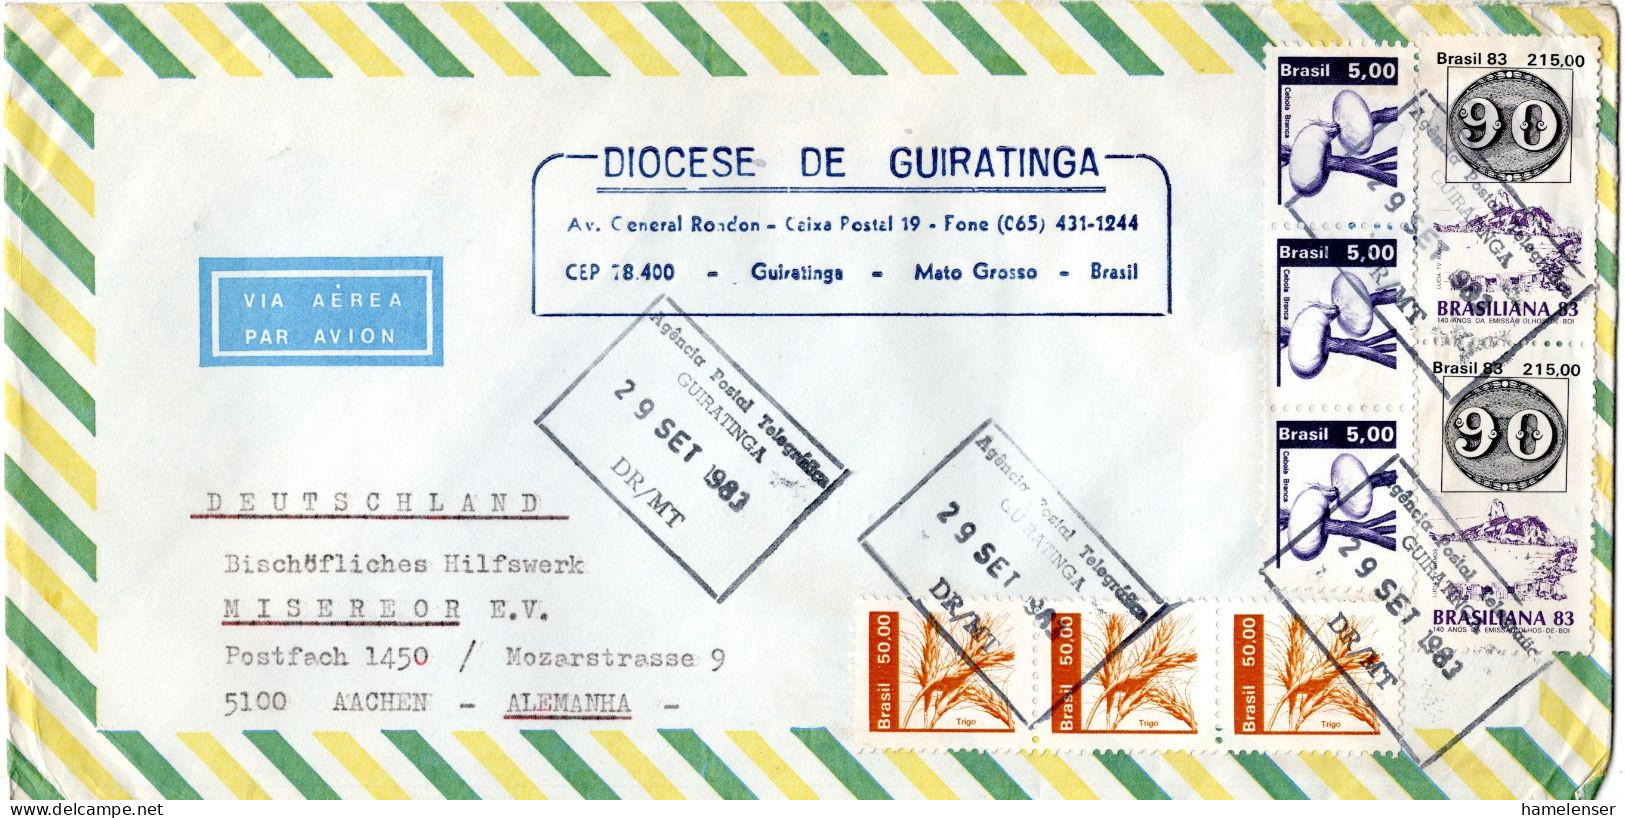 L75020 - Brasilien - 1983 - 2@Cr215,00 Brasiliana '83 MiF A LpBf GUIRATINGA -> Westdeutschland - Brieven En Documenten